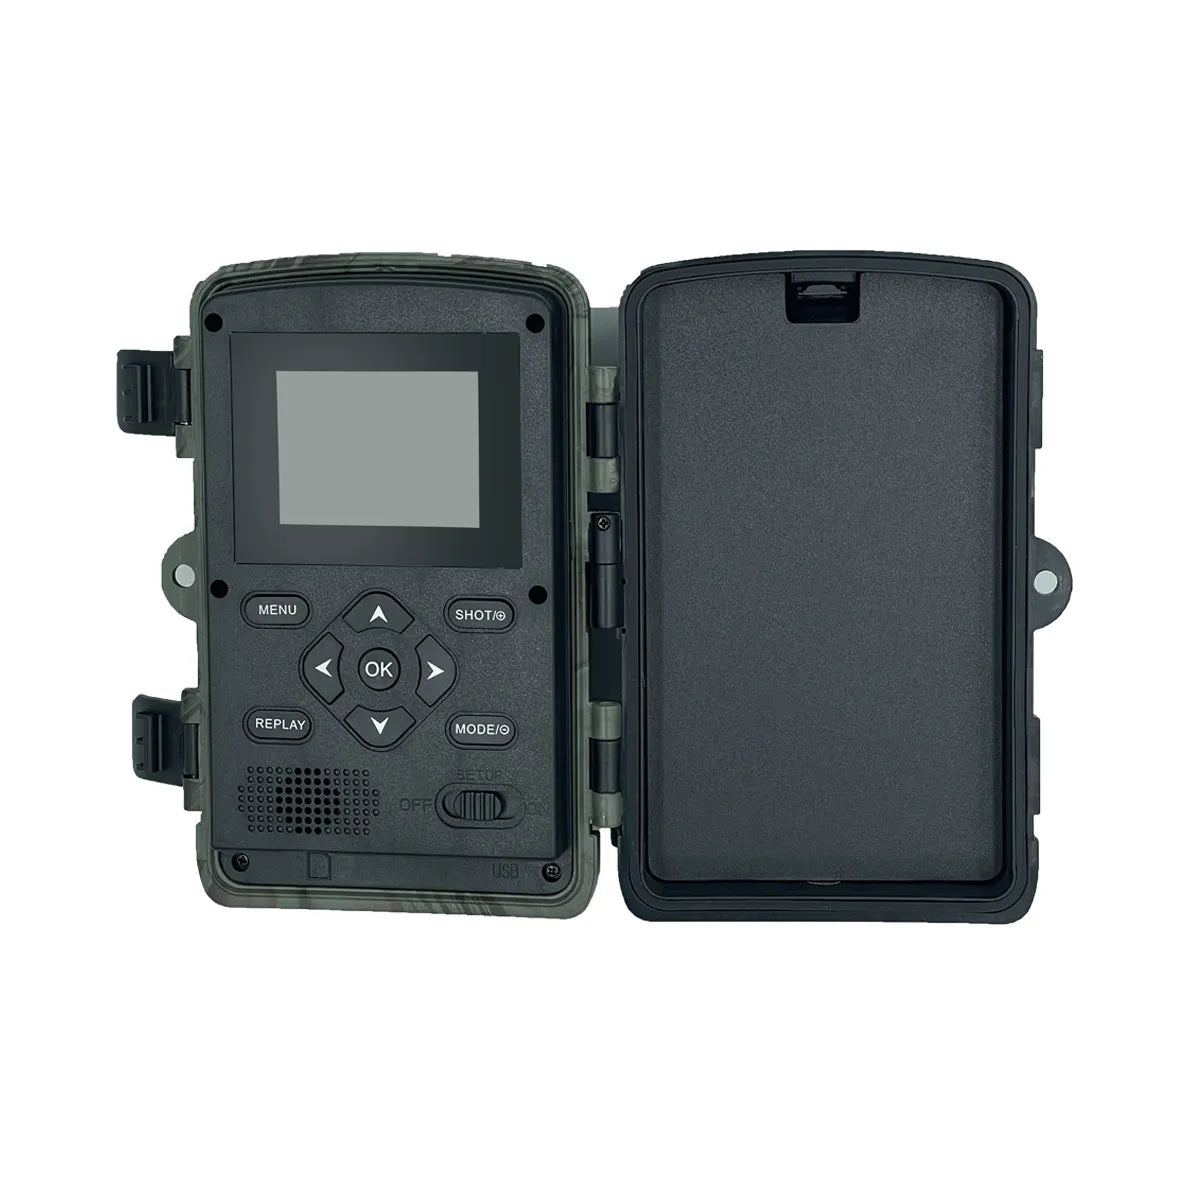 PR5000 WIFI HD Hunting Trail Camera IR Night Vision Outdoor Wildlife Animals Watching Video Recorder Cam 32MP 1080P Bluetooth